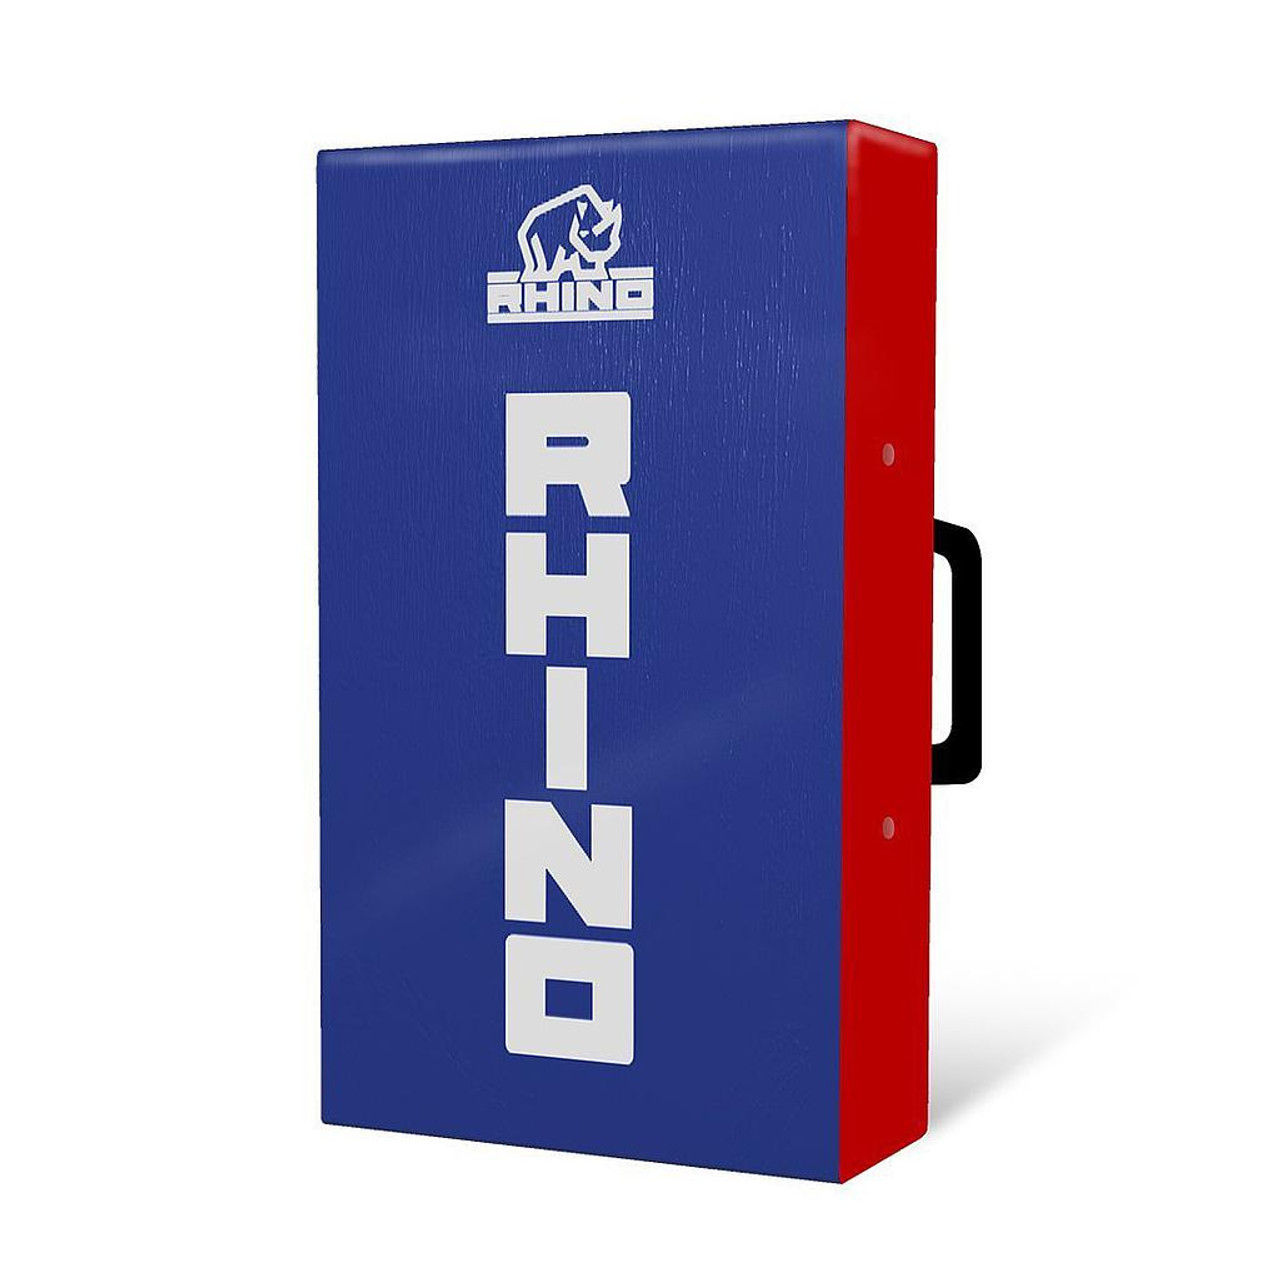 Rhino Mini Hit Shield 50x30x10cm (Blue/Red) - Ready For Matchday